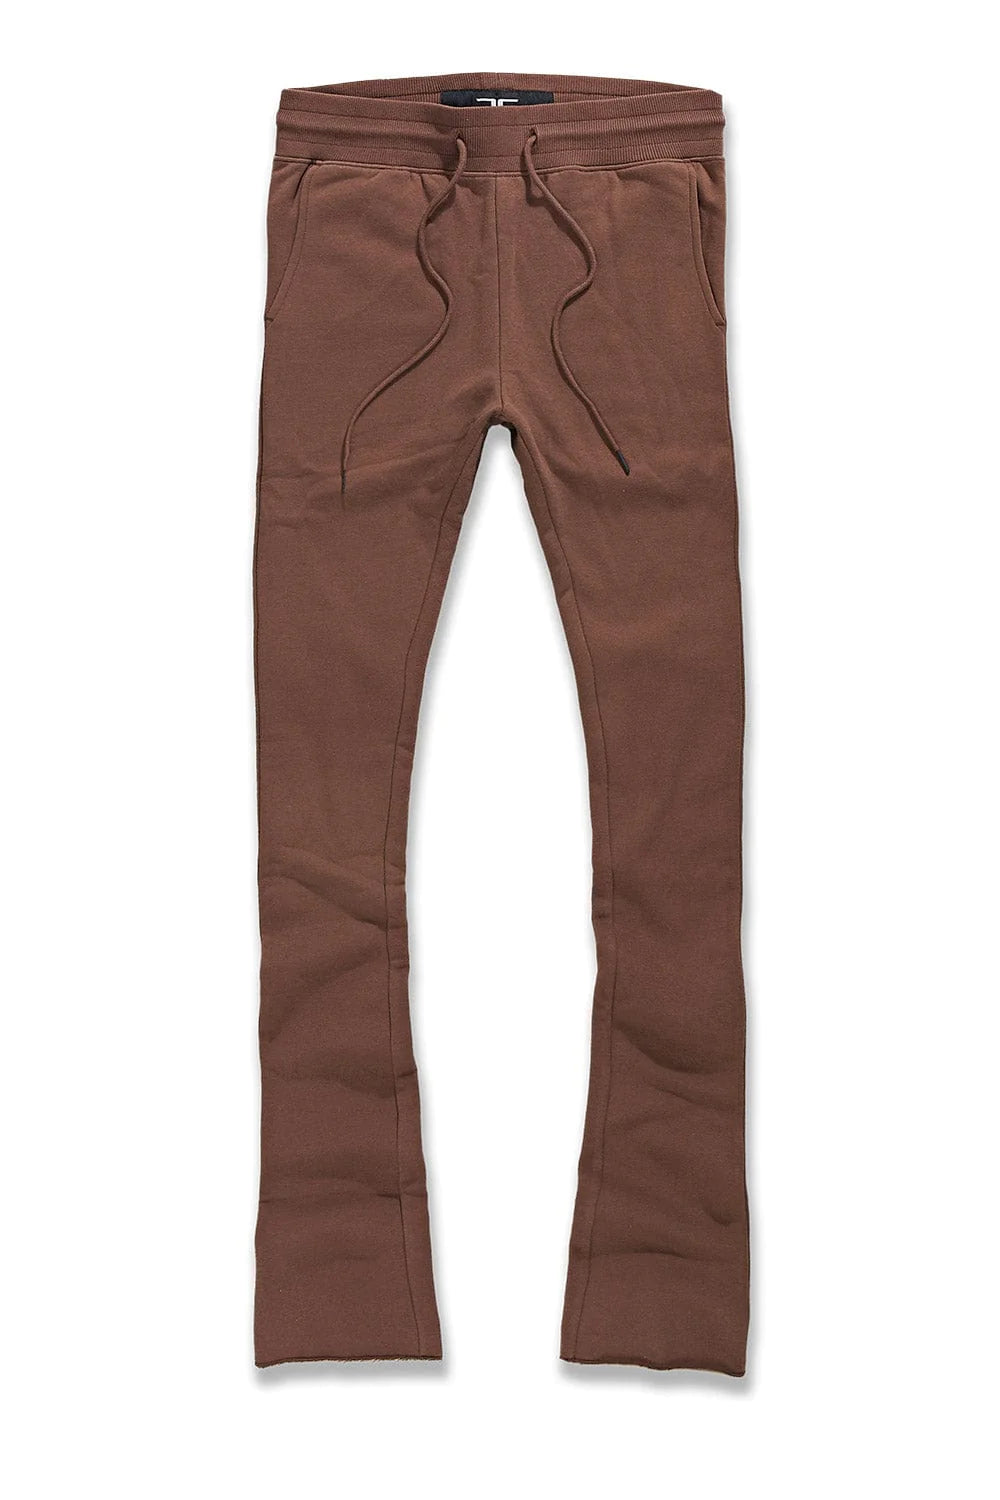 Uptown Stacked Sweatpants - Dark Chocolate – Todays Man Store